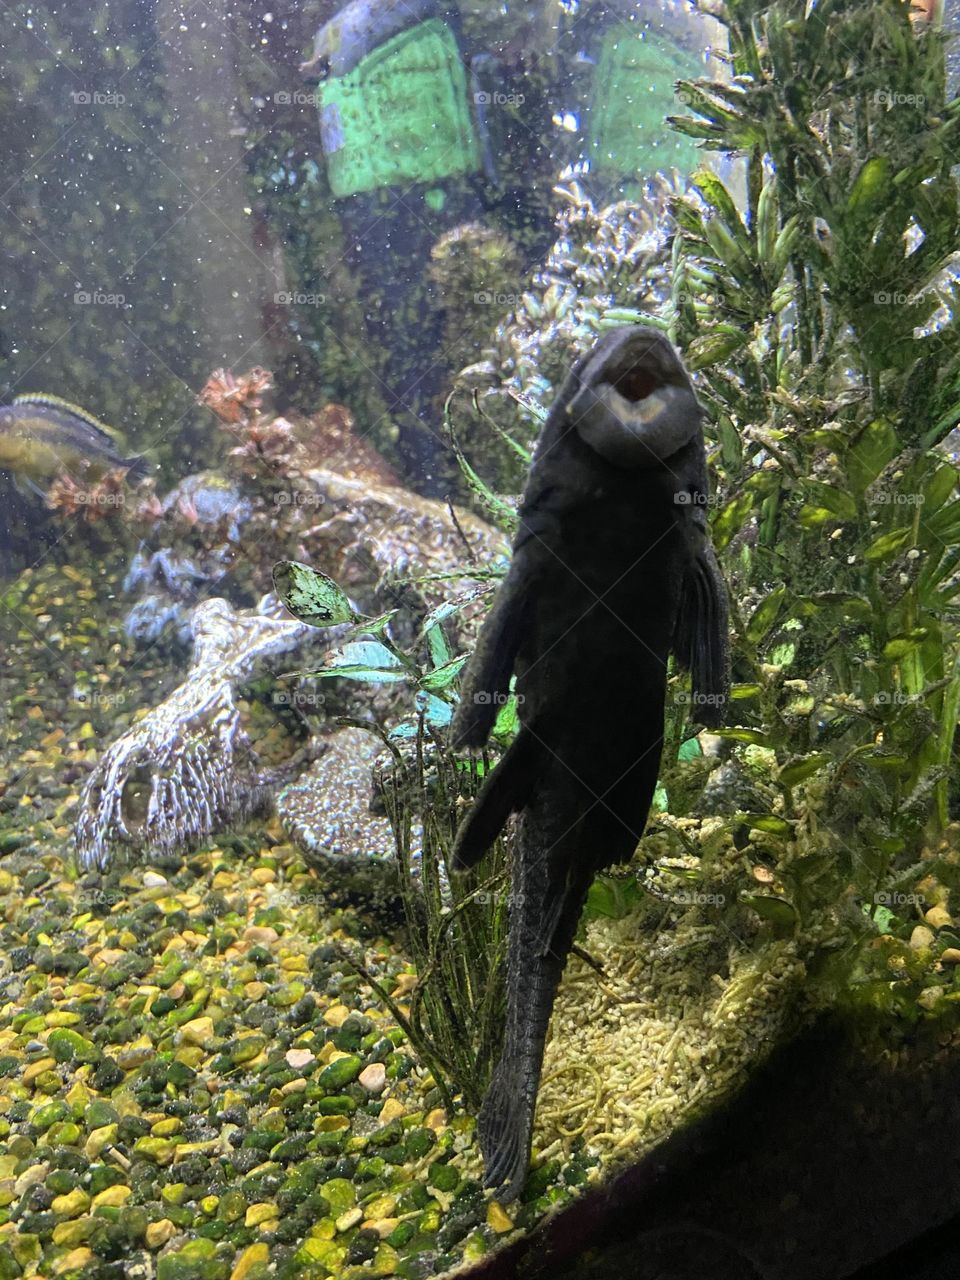 Plectostomus (suckermouth catfish) cleaning the fish tank